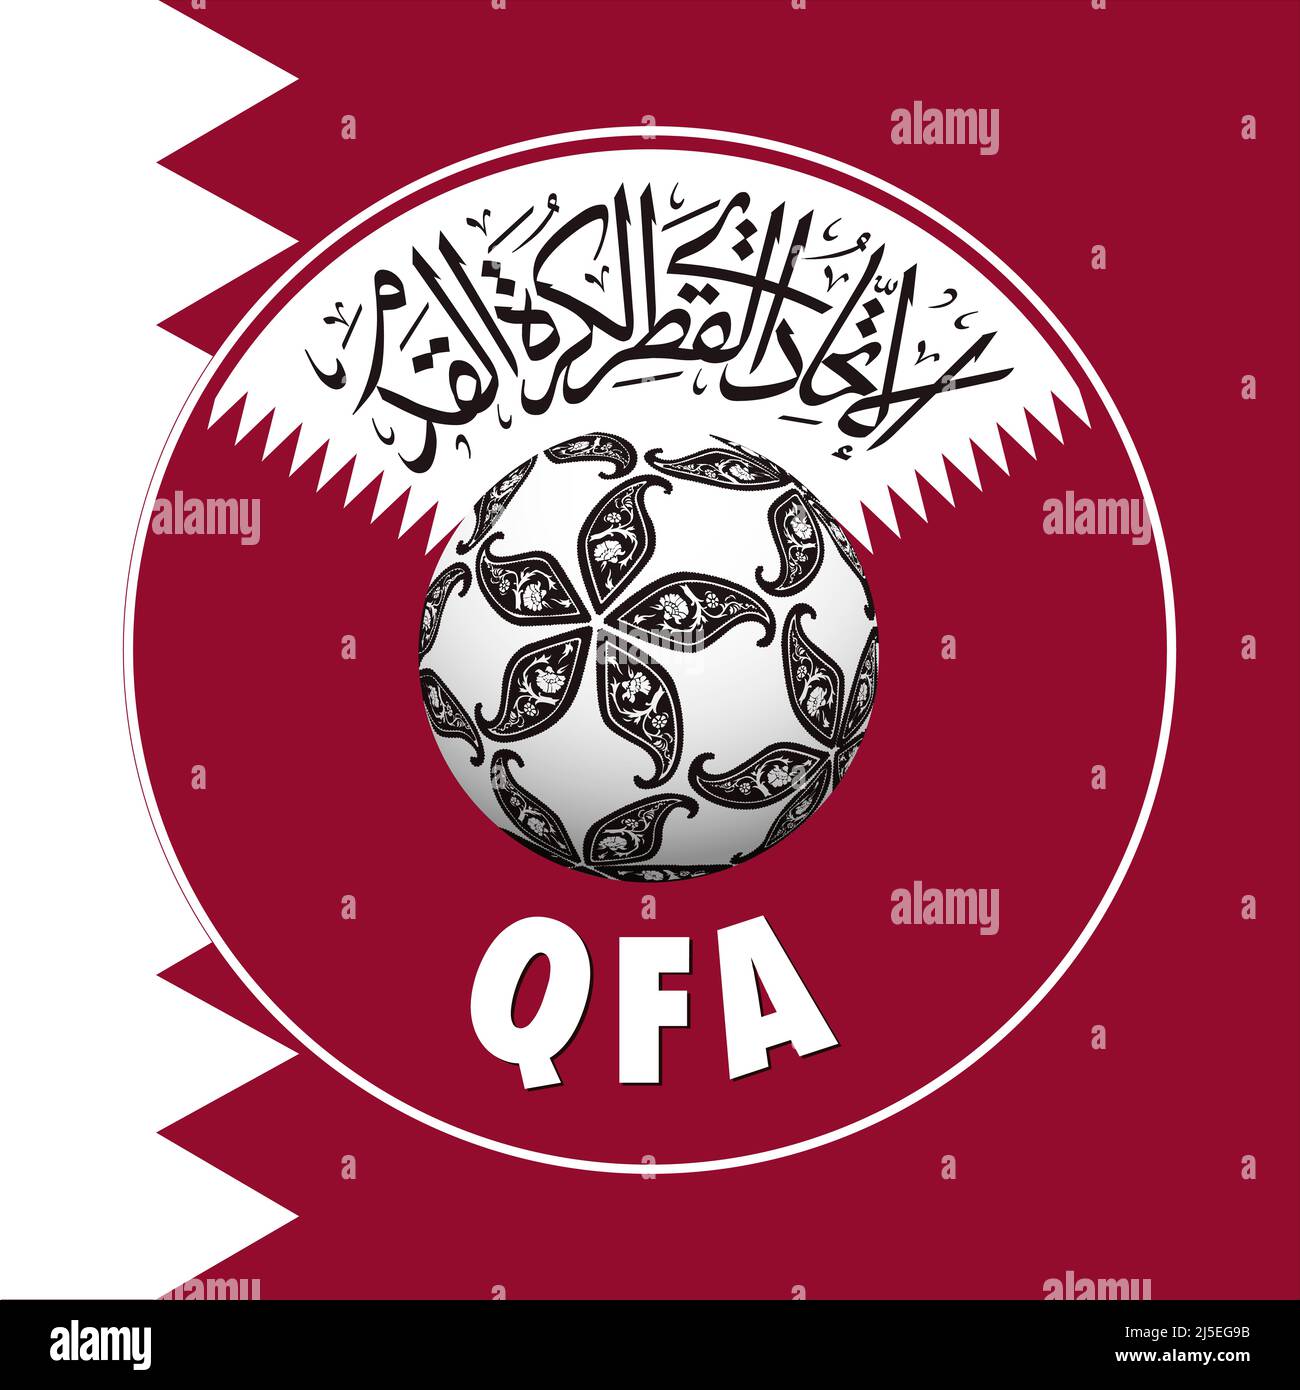 Qatar Football Federation Logo With National Flag Fifa World Cup 22 Illustration Stock Photo Alamy